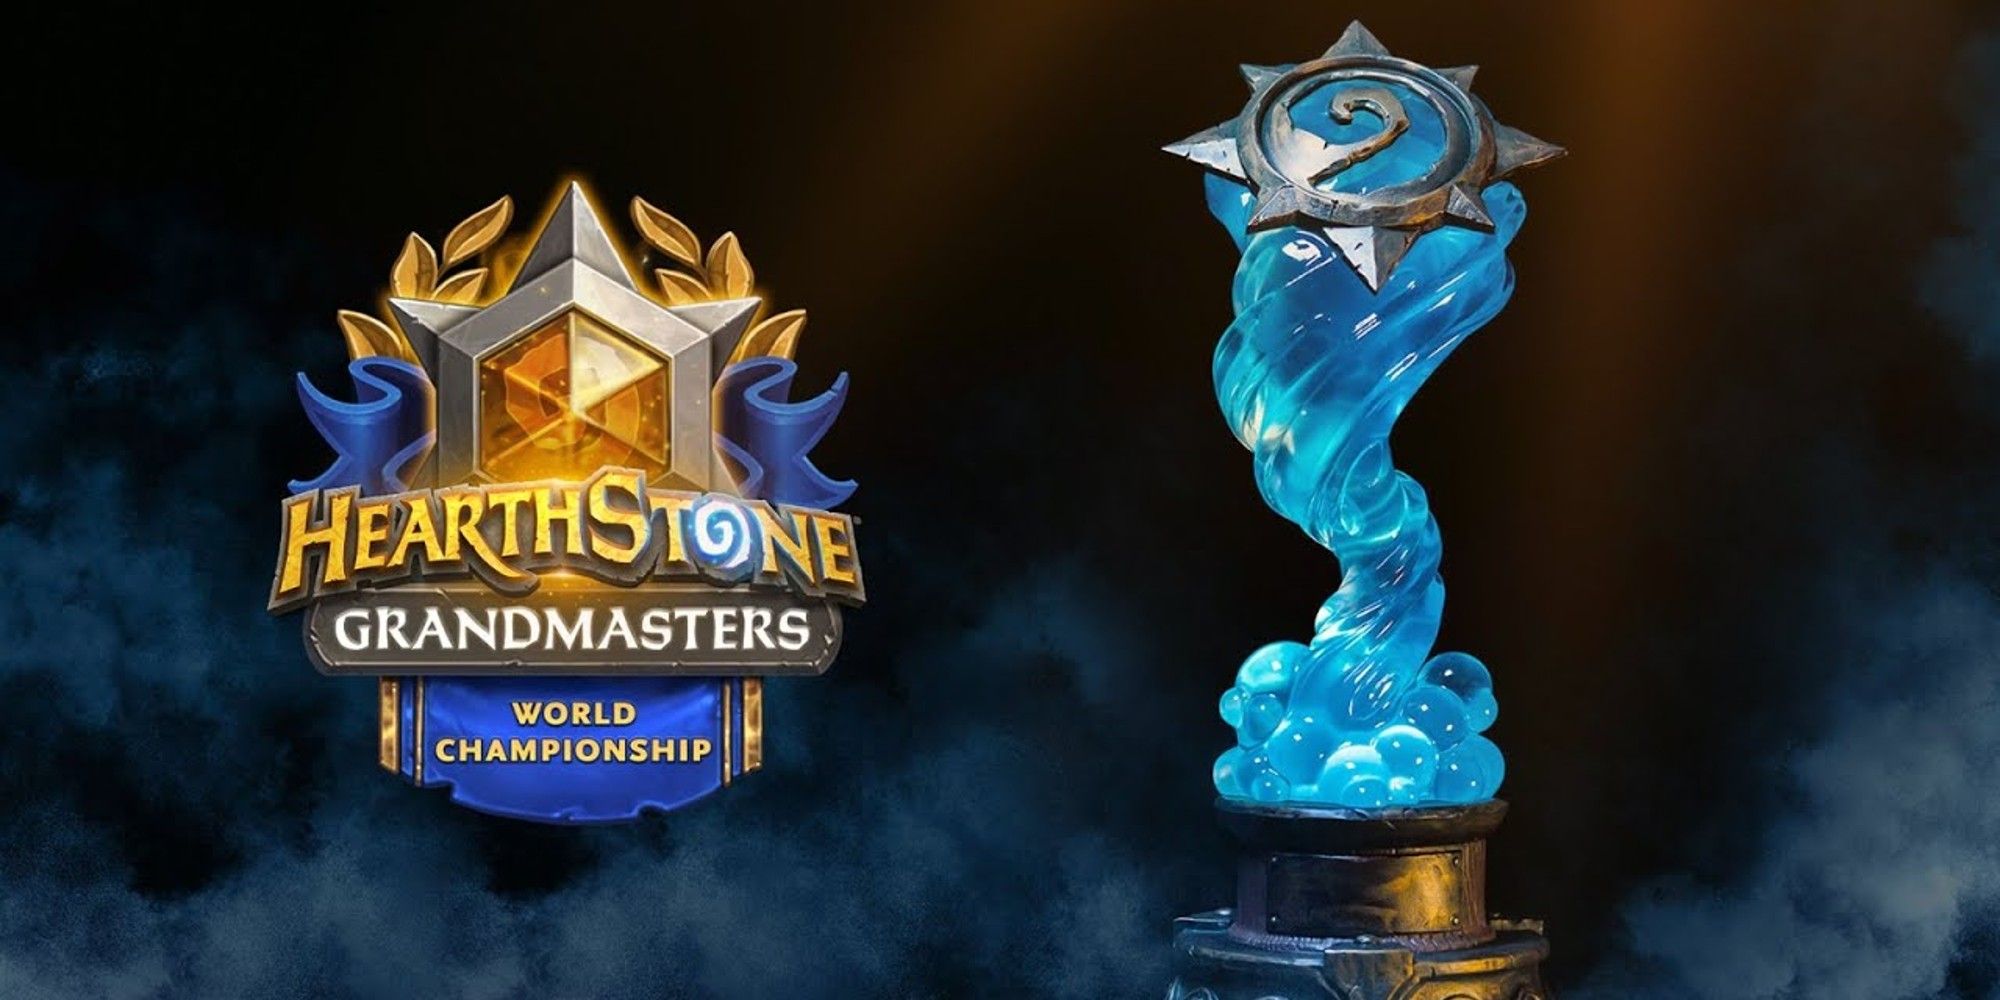 Hearthstone Grandmasters World Championship, logo and trophy